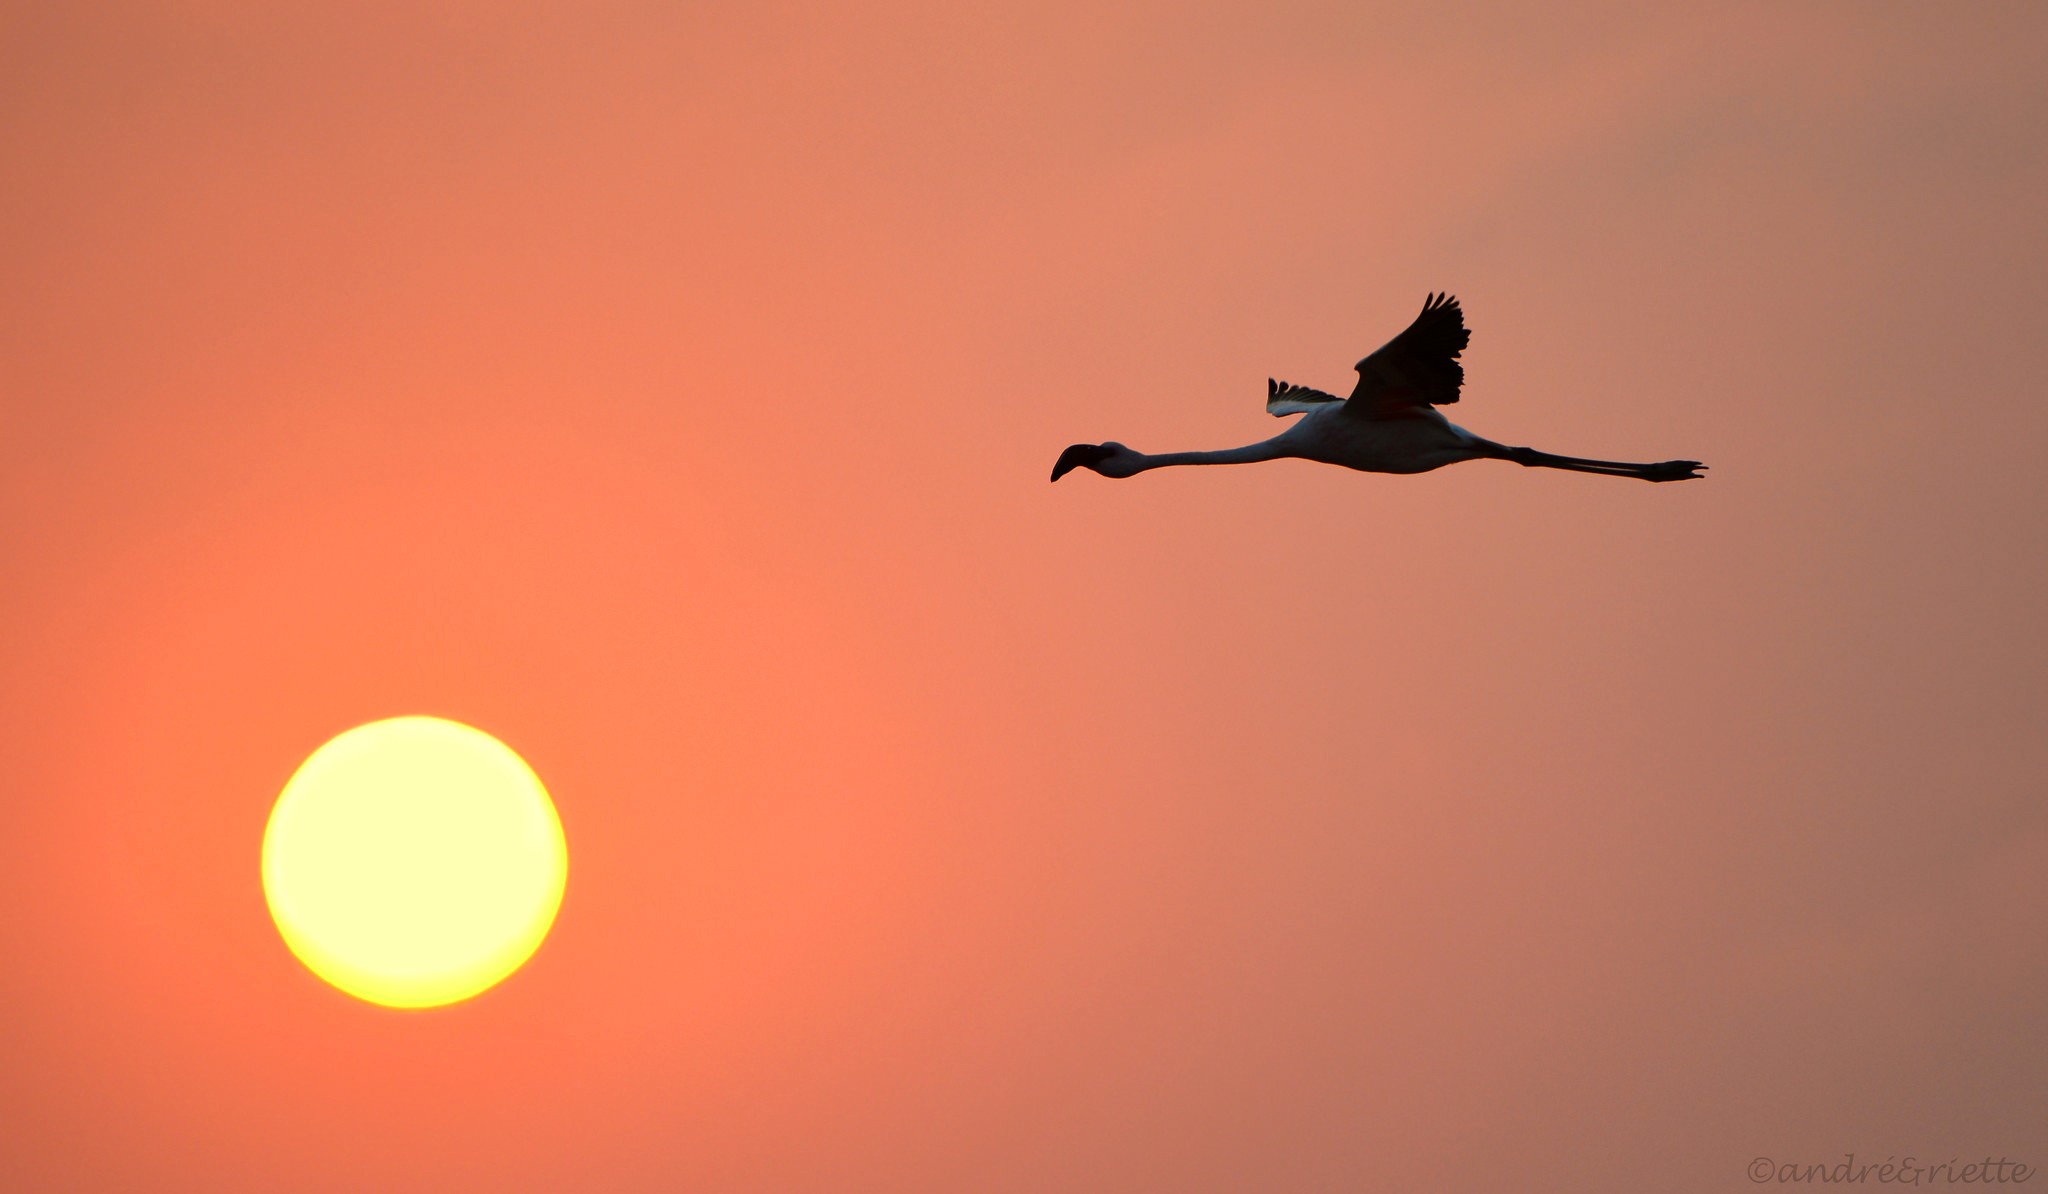 General 2048x1194 flamingos animals birds orange sky Sun wings flying nature low light watermarked